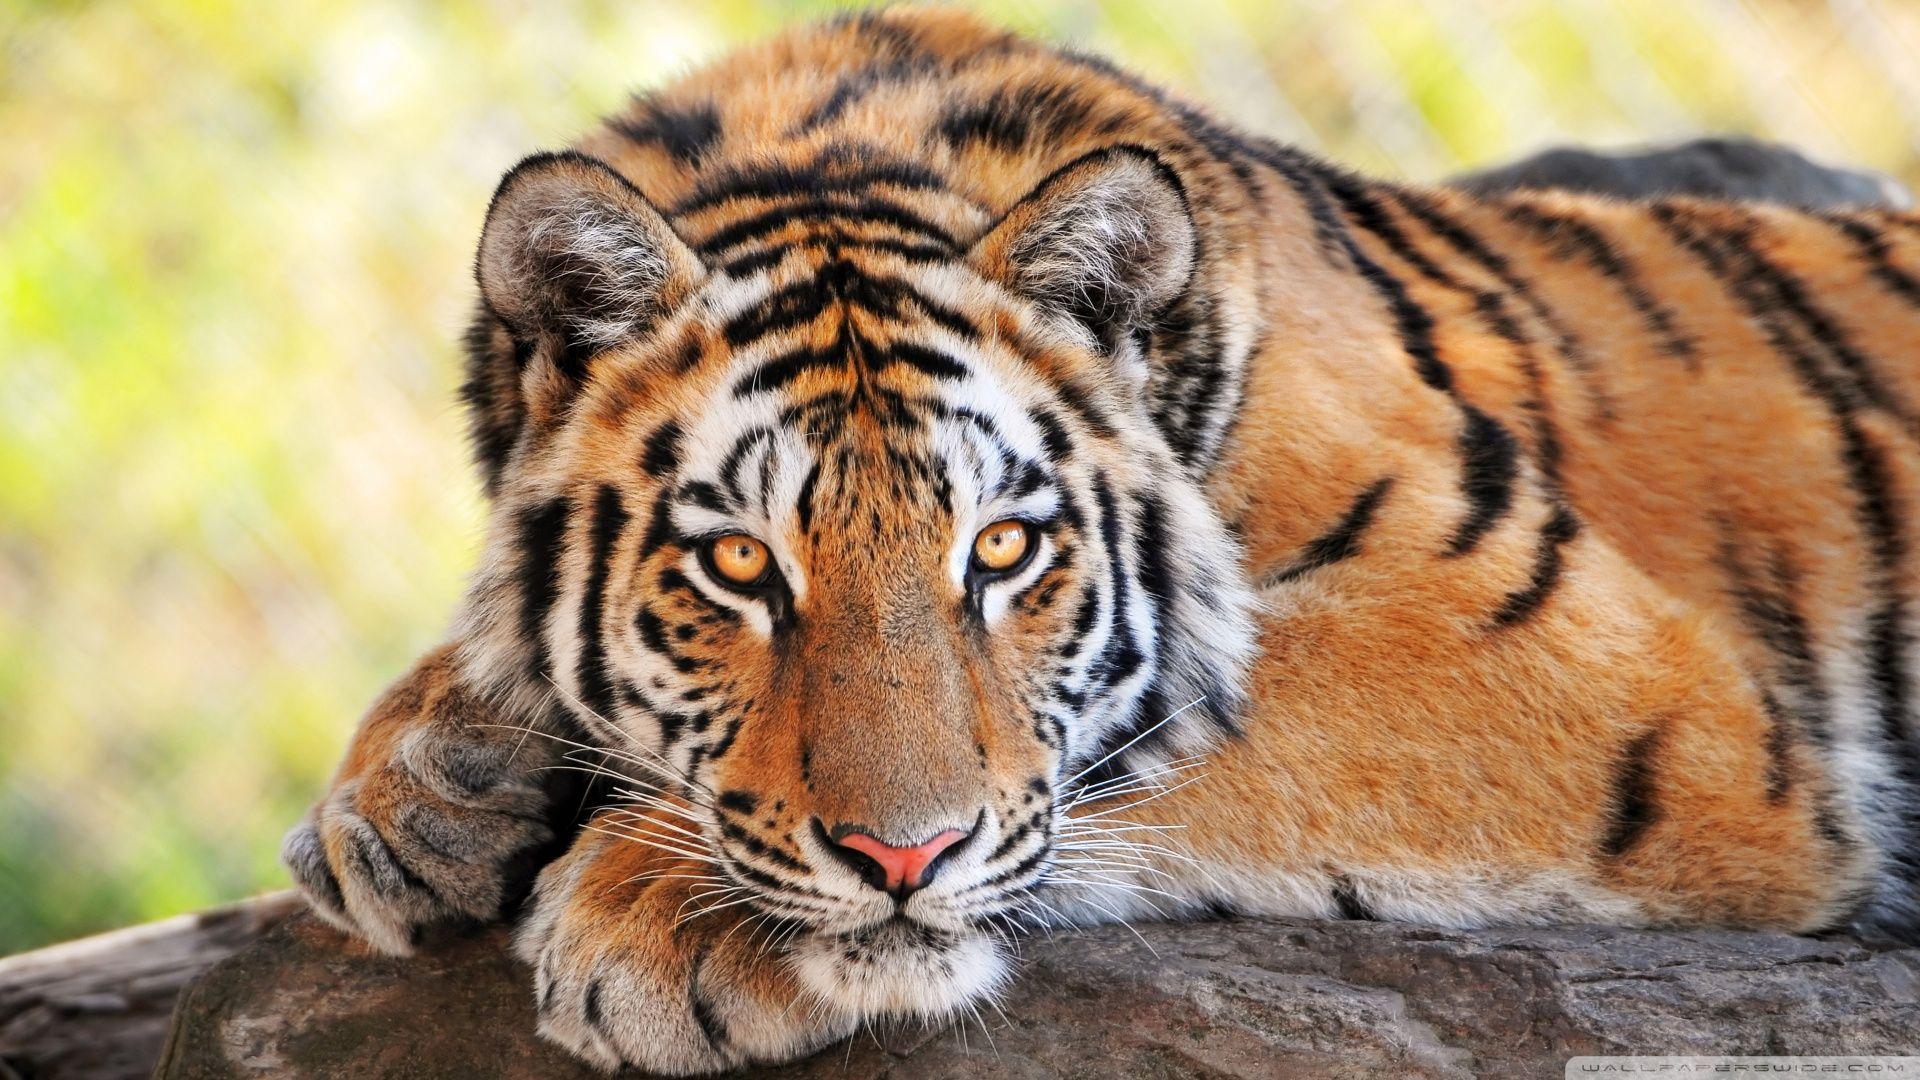 Young Tiger Stunning Download HD WallpaperD HD Wallpaper. Tiger